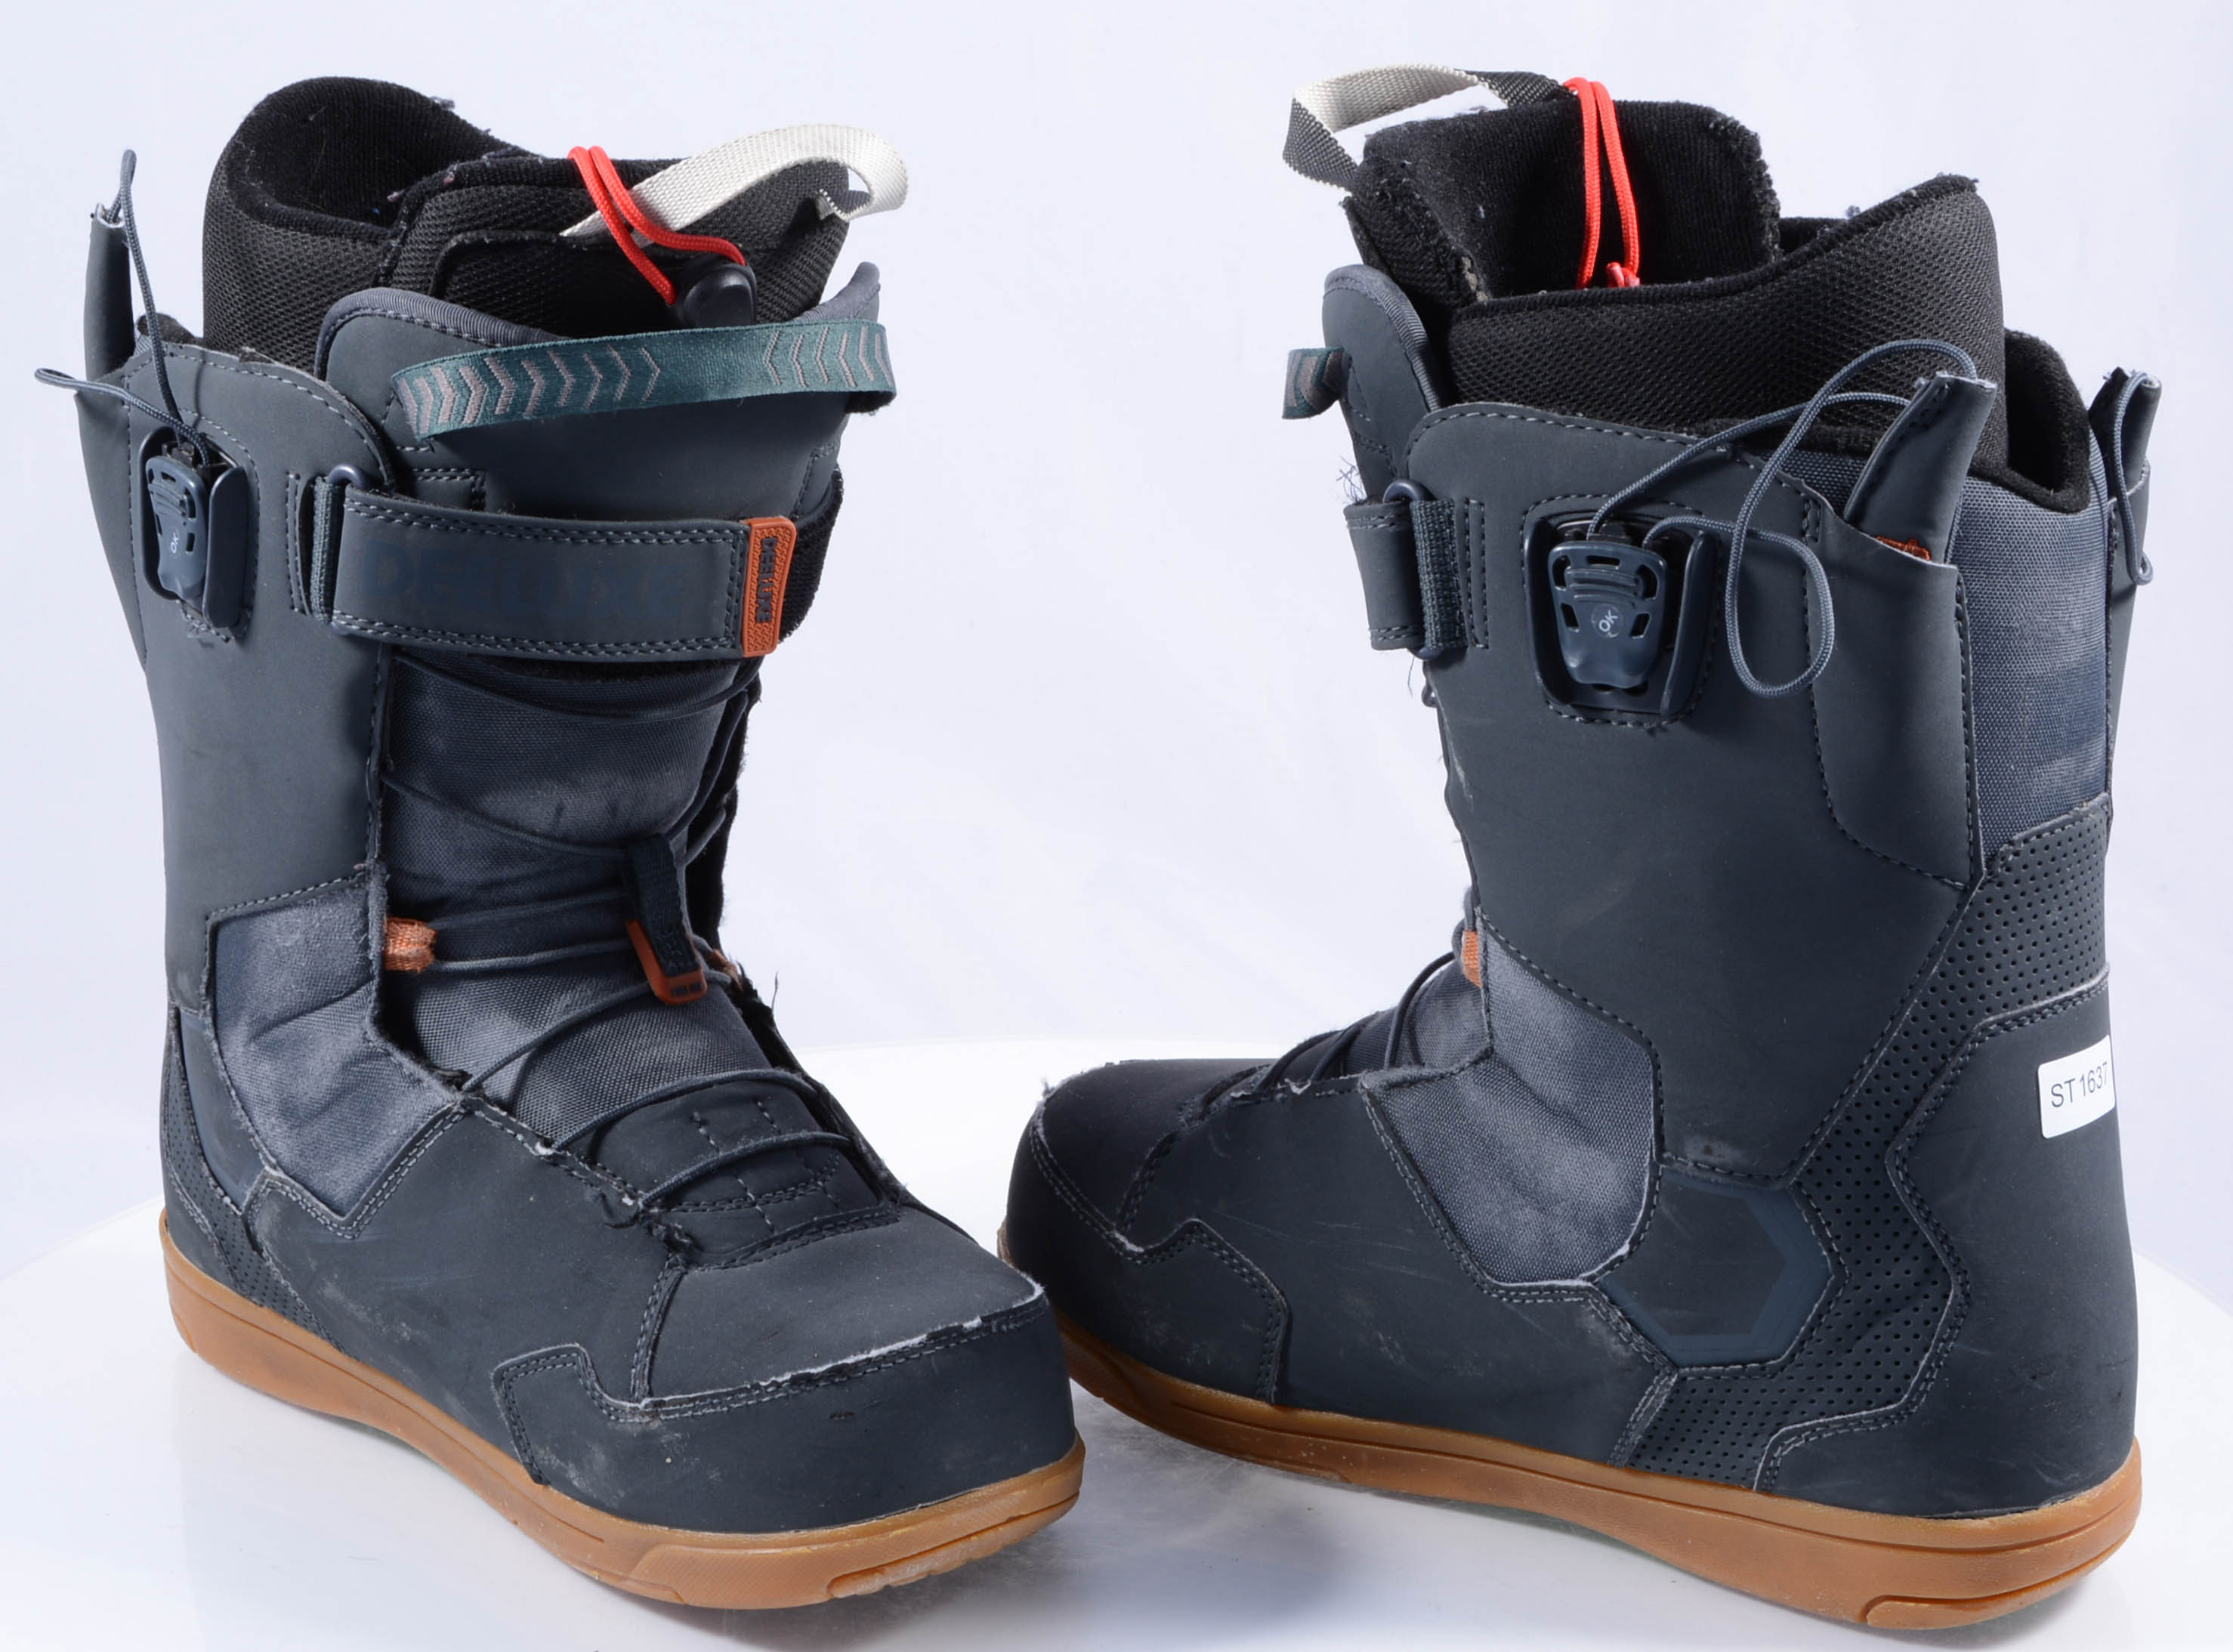 snowboard boots DEELUXE ID 7.1 CF, grey   Mardosport.com